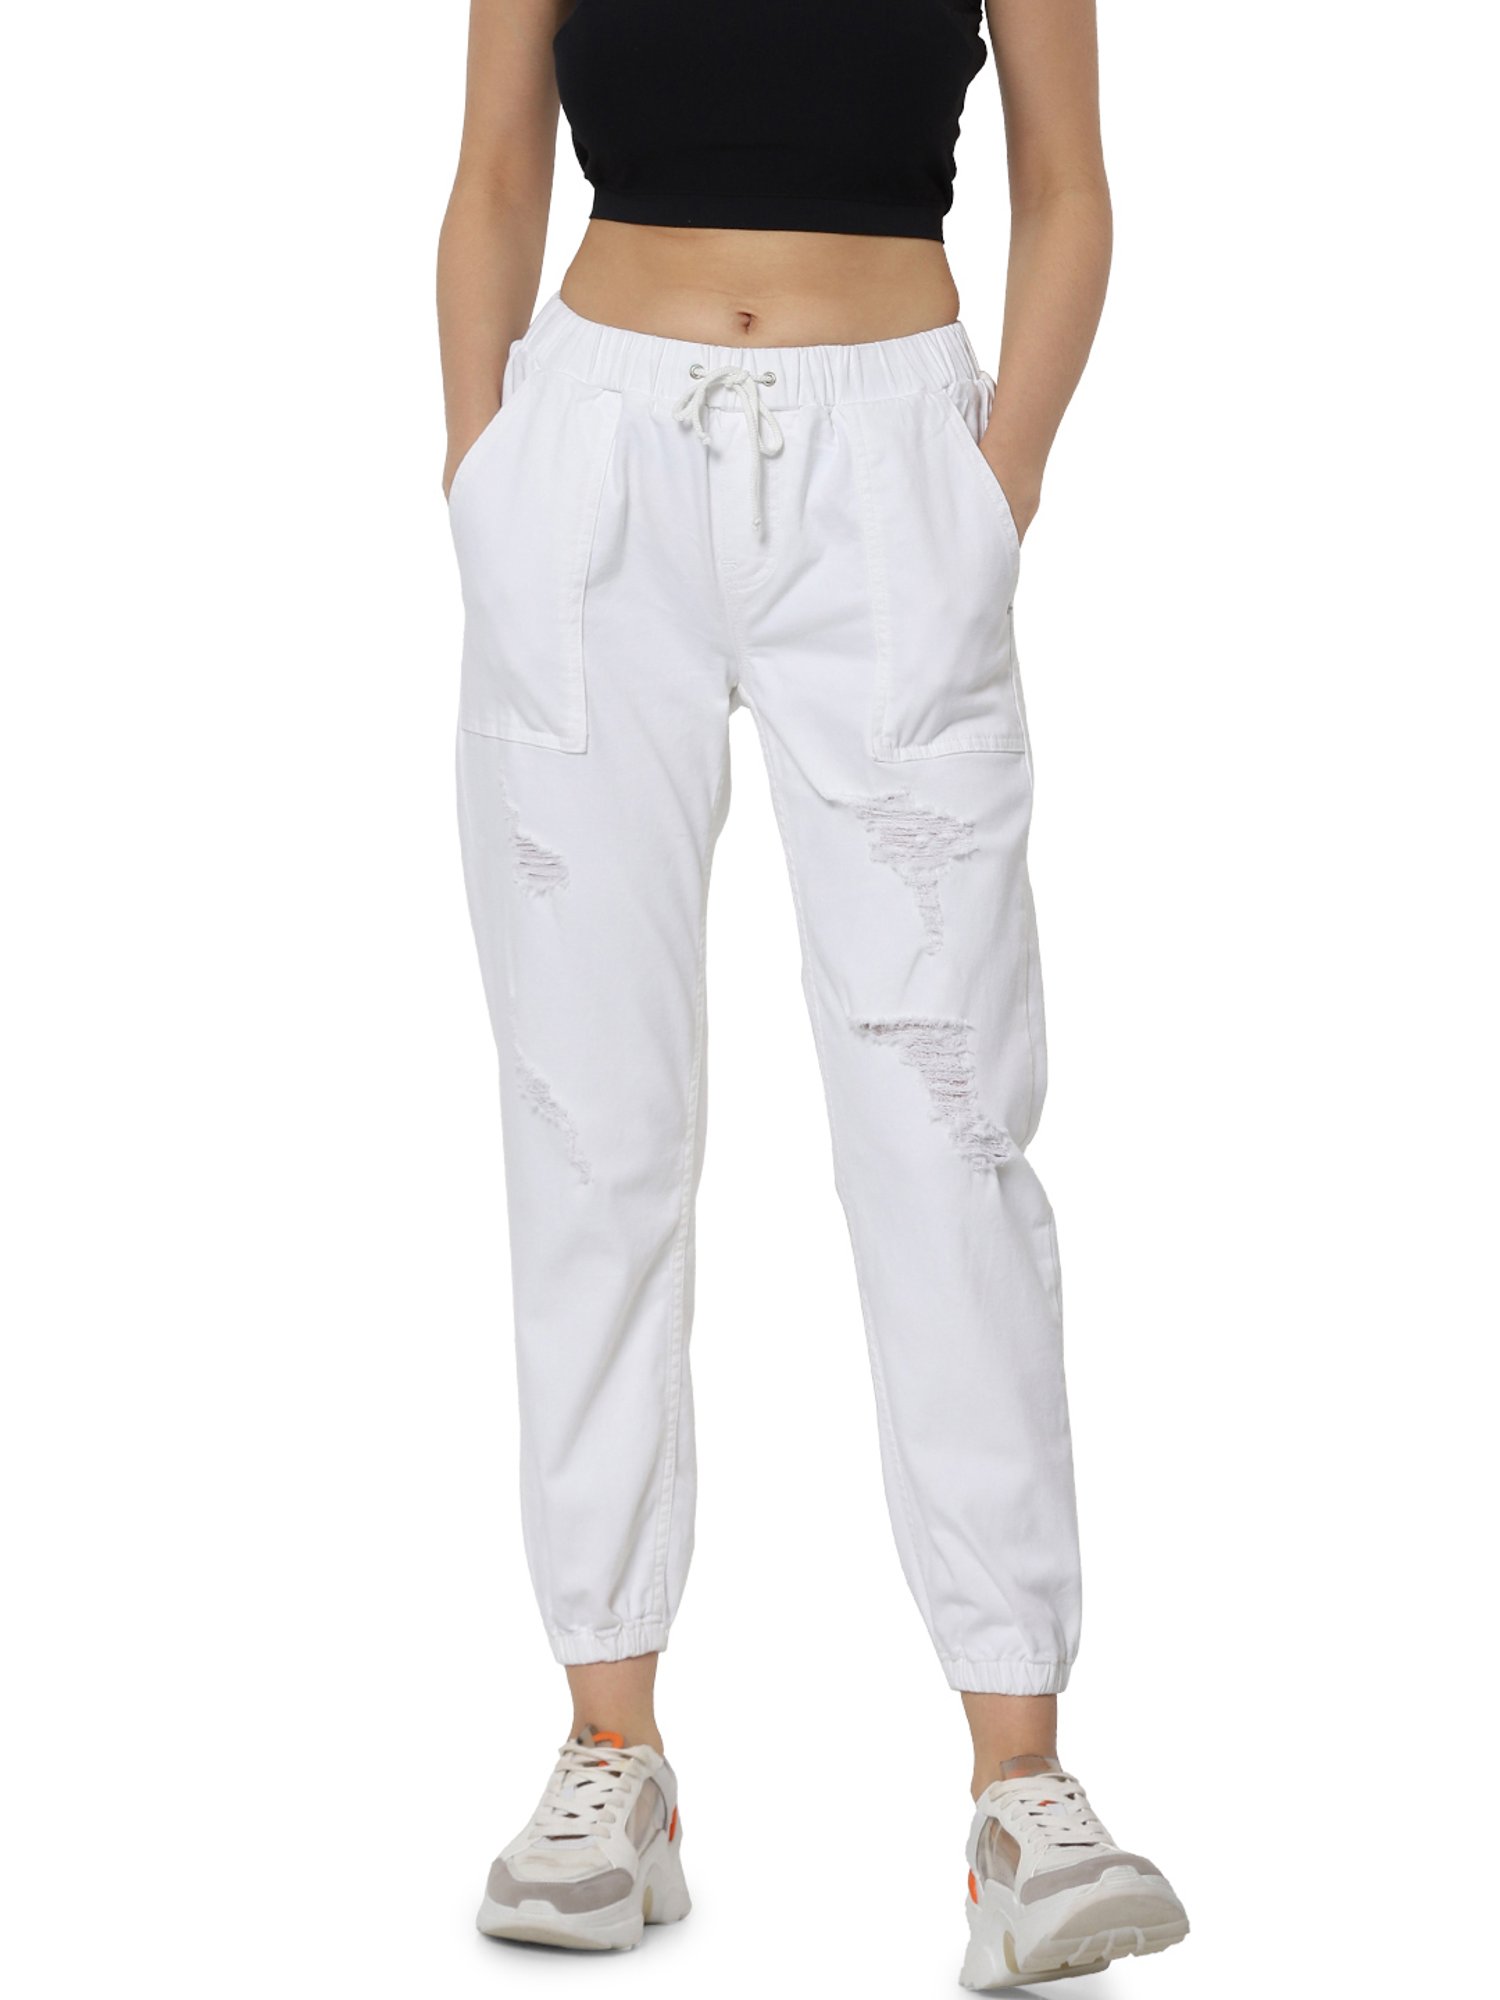 LAABHA Solid Women White Track Pants  Buy LAABHA Solid Women White Track  Pants Online at Best Prices in India  Flipkartcom